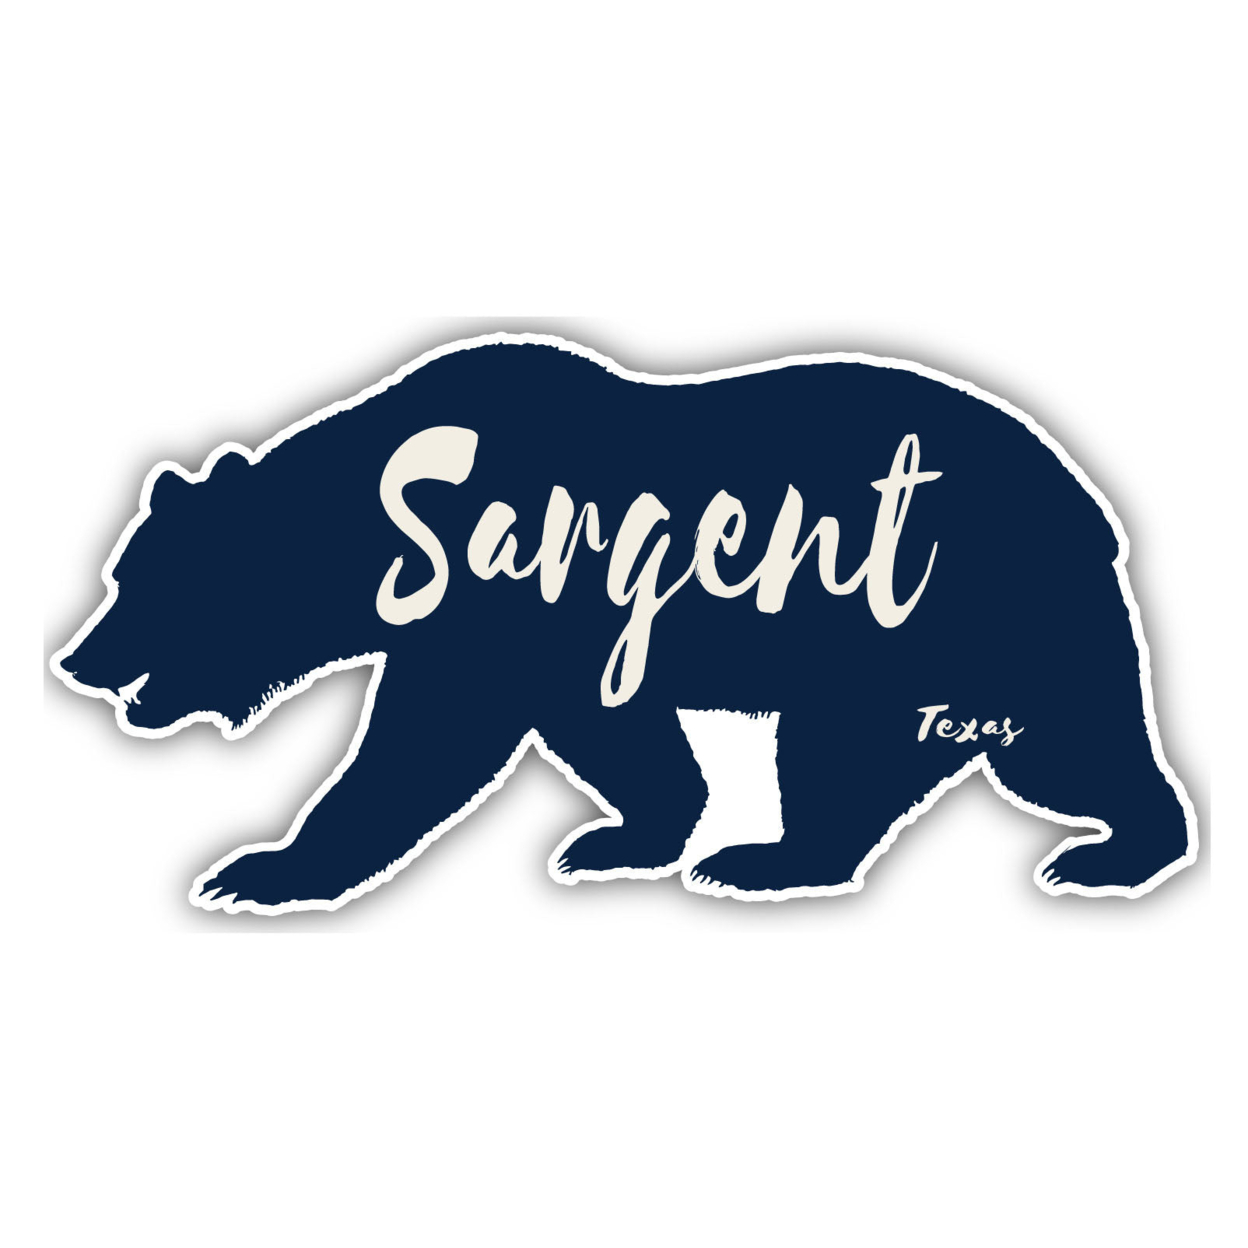 Sargent Texas Souvenir Decorative Stickers (Choose Theme And Size) - Single Unit, 4-Inch, Bear